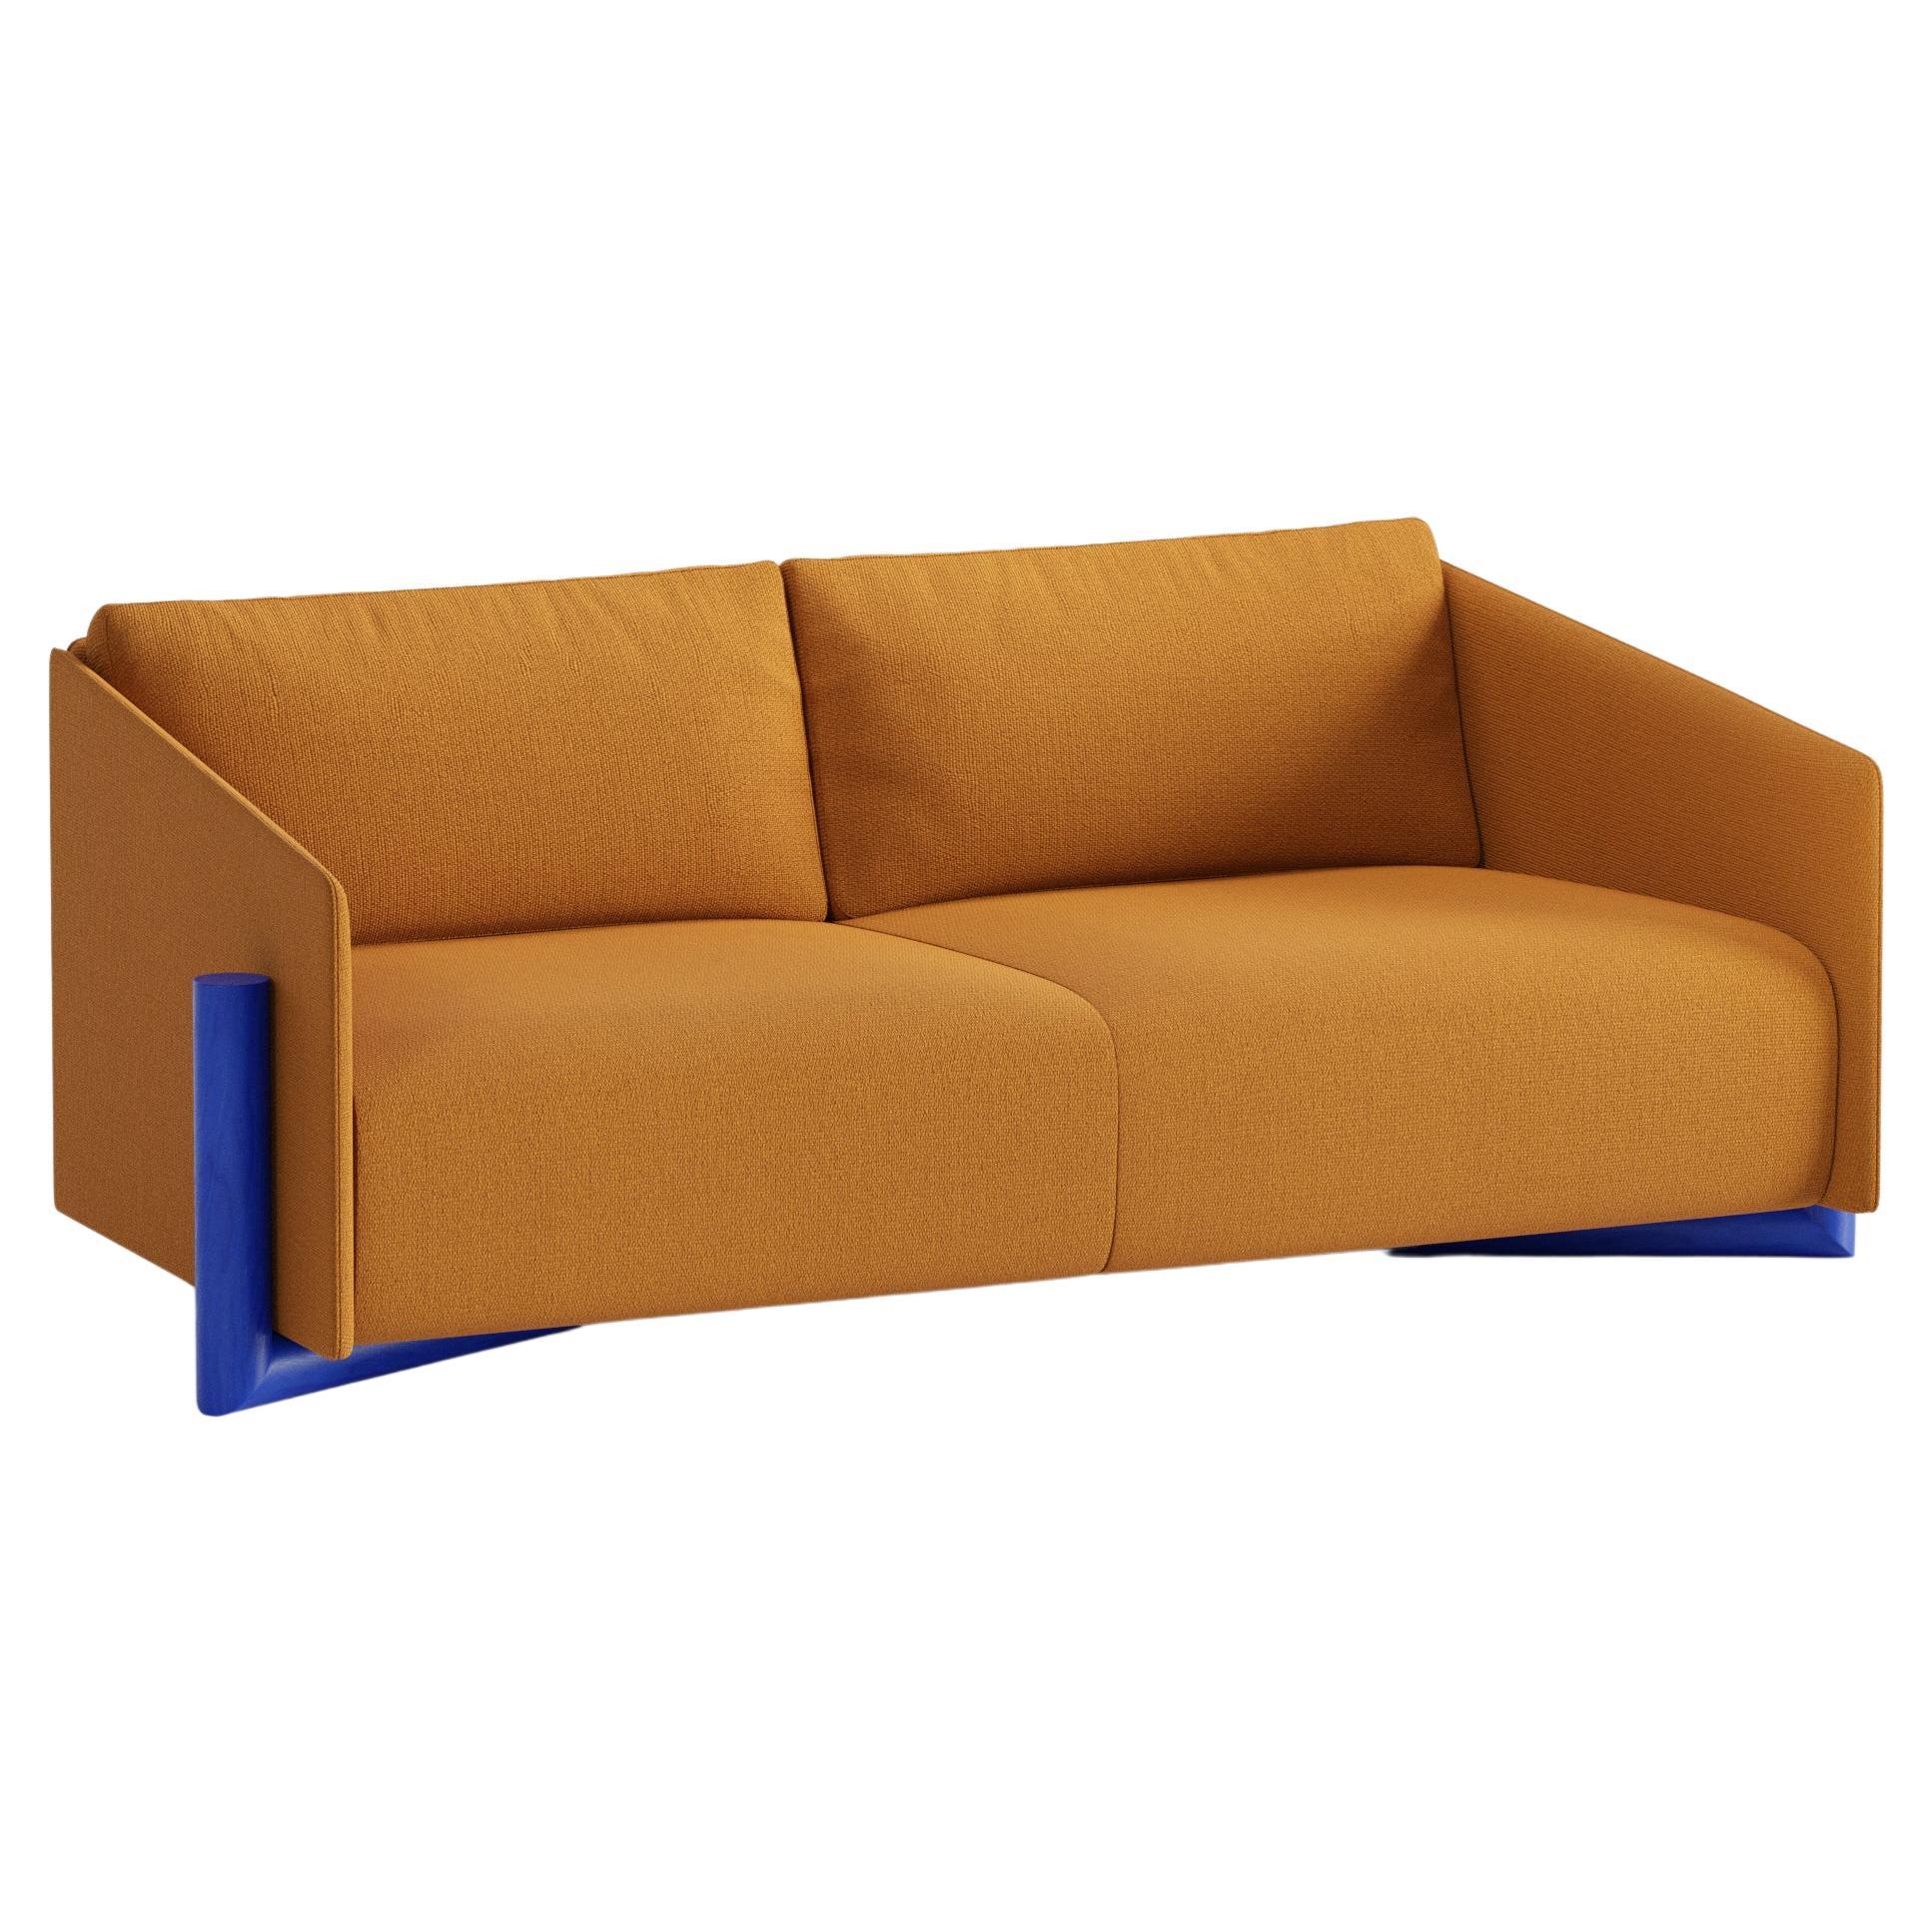 Mustard Timber 3 Seater Sofa by Kann Design